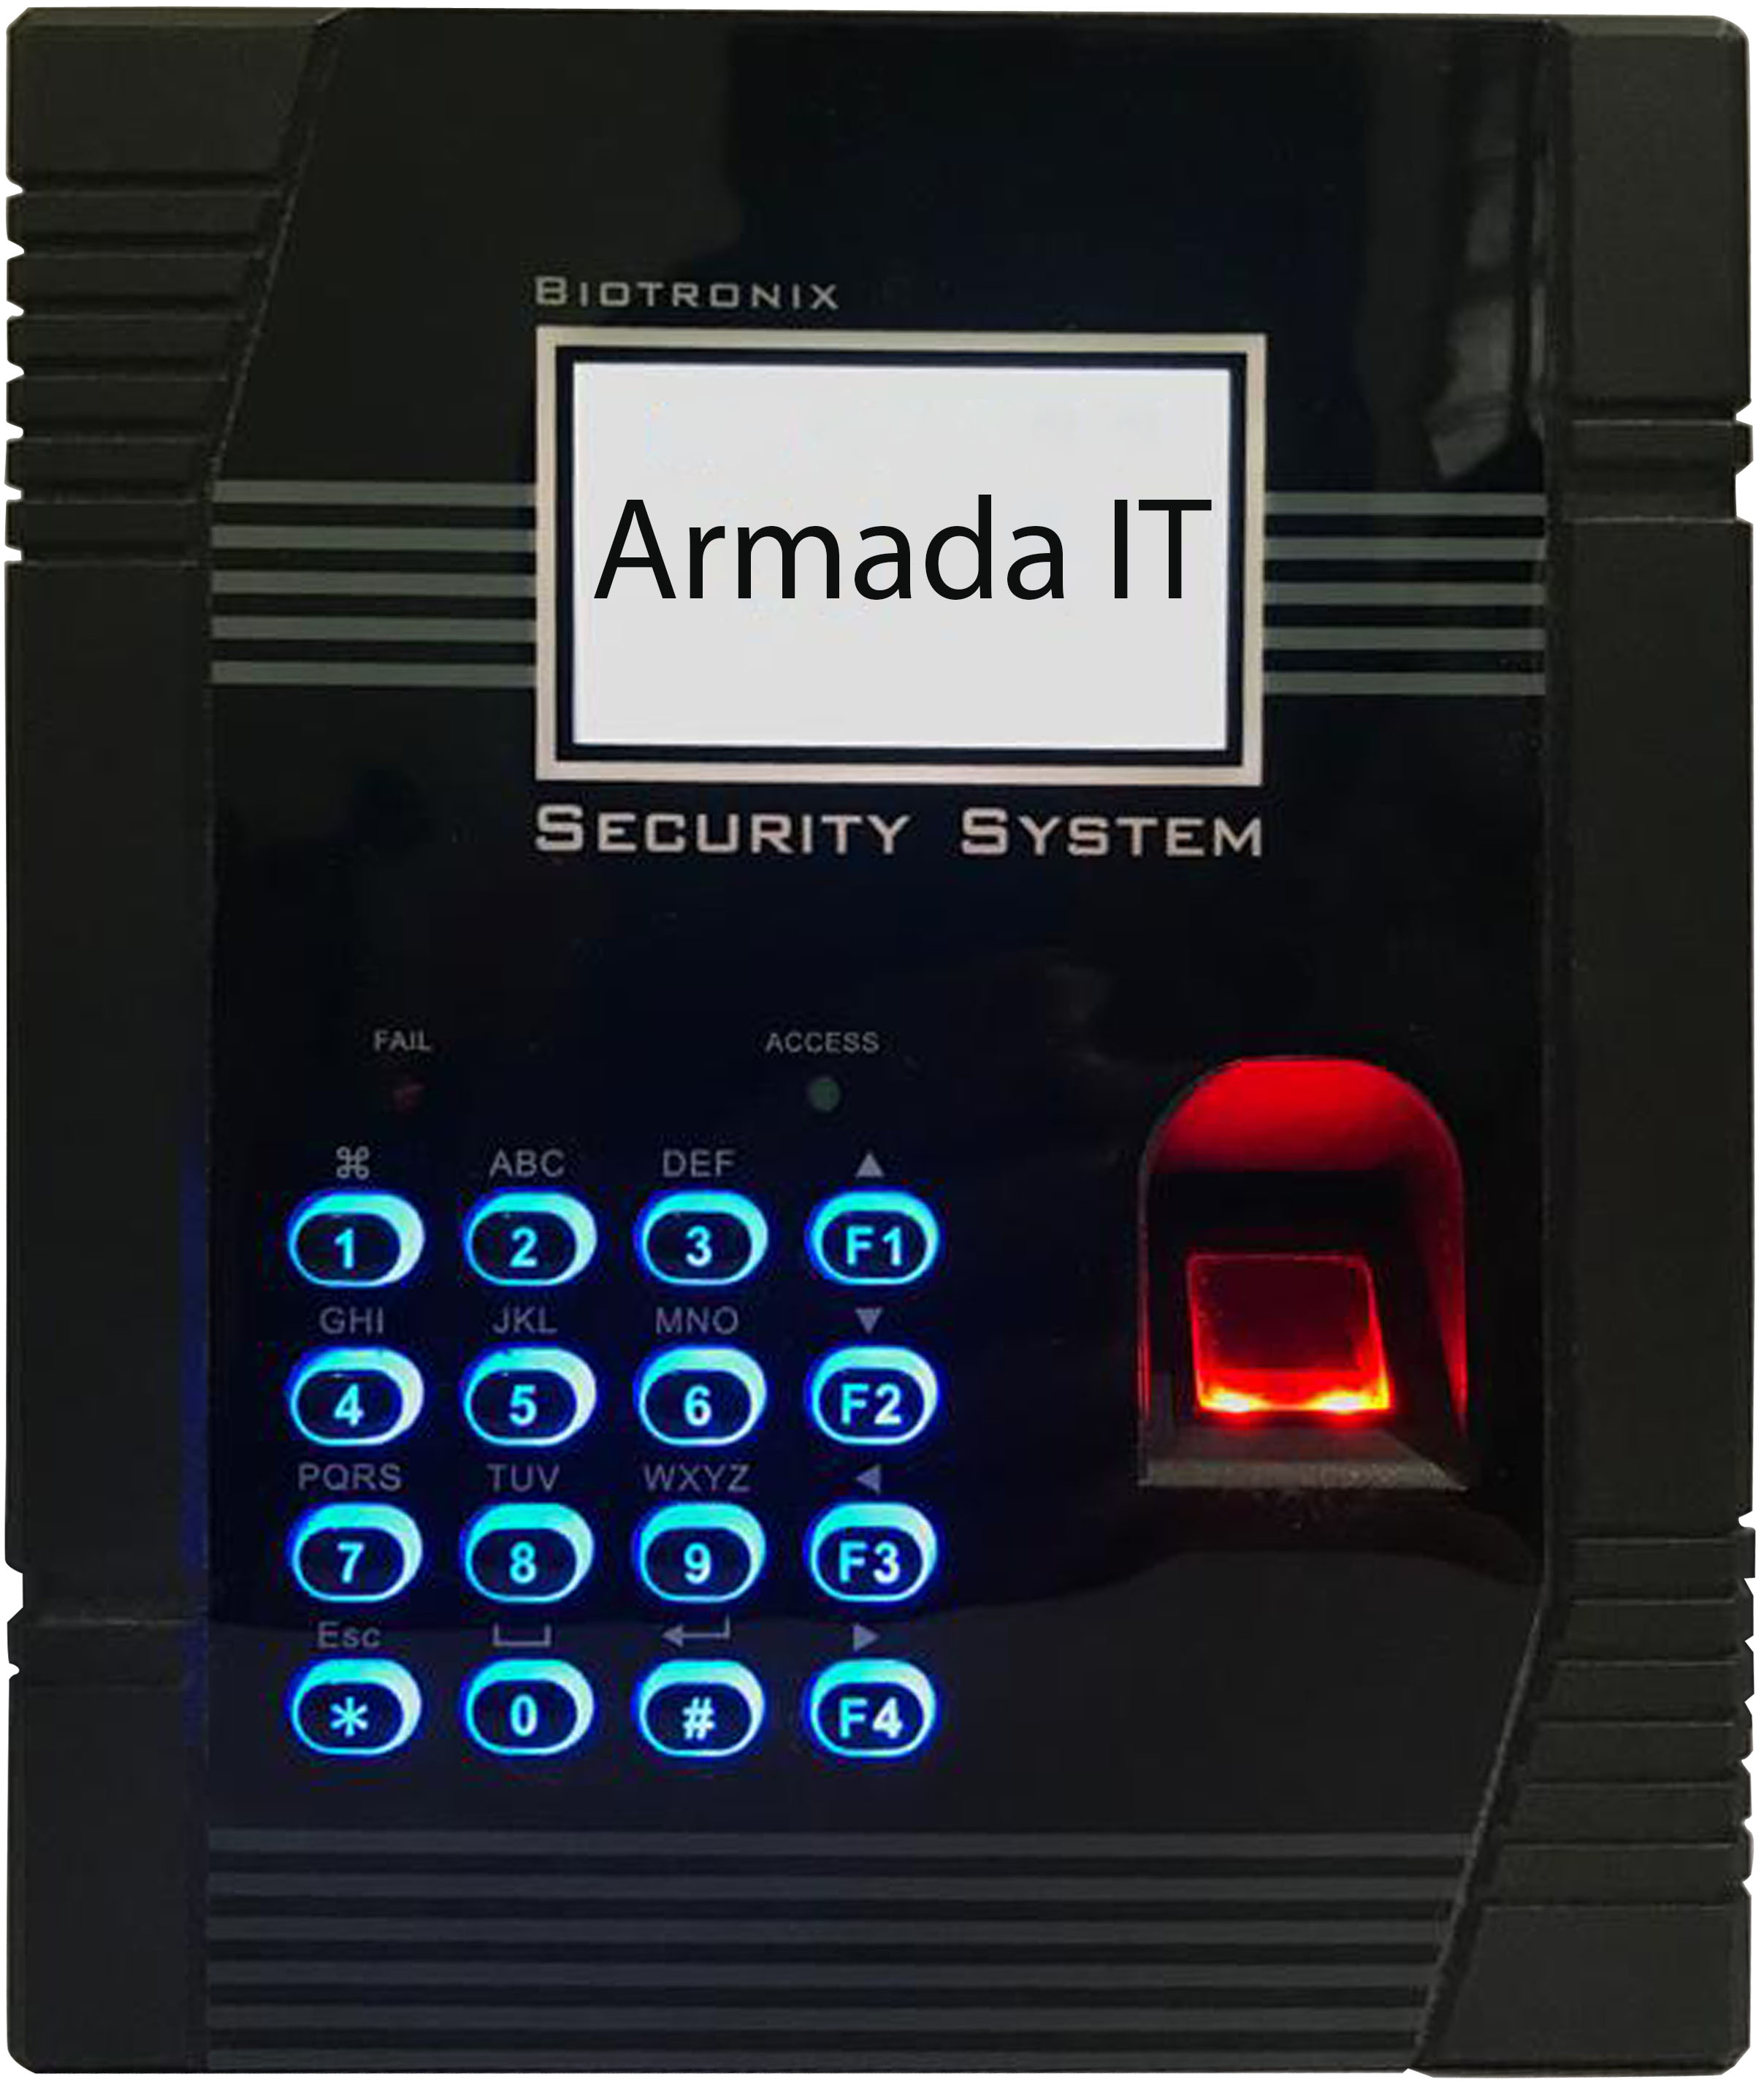 Armada IT's Biotronix Fingerprint Attendance Machine in Medan